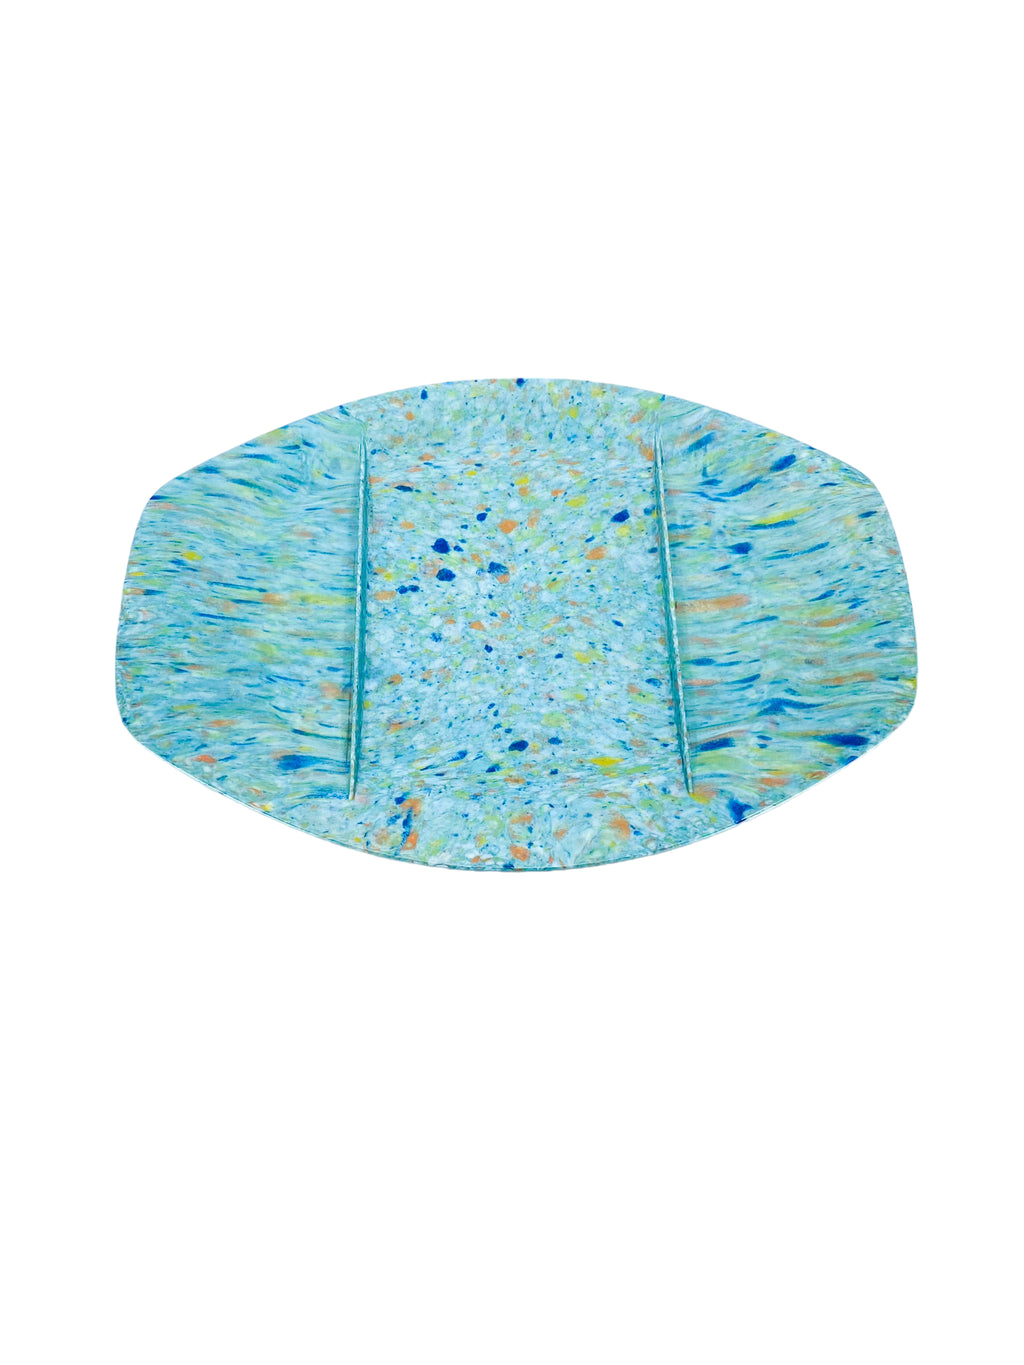 Vintage Oneida Blue Confetti Melamine Divided Serving Platter